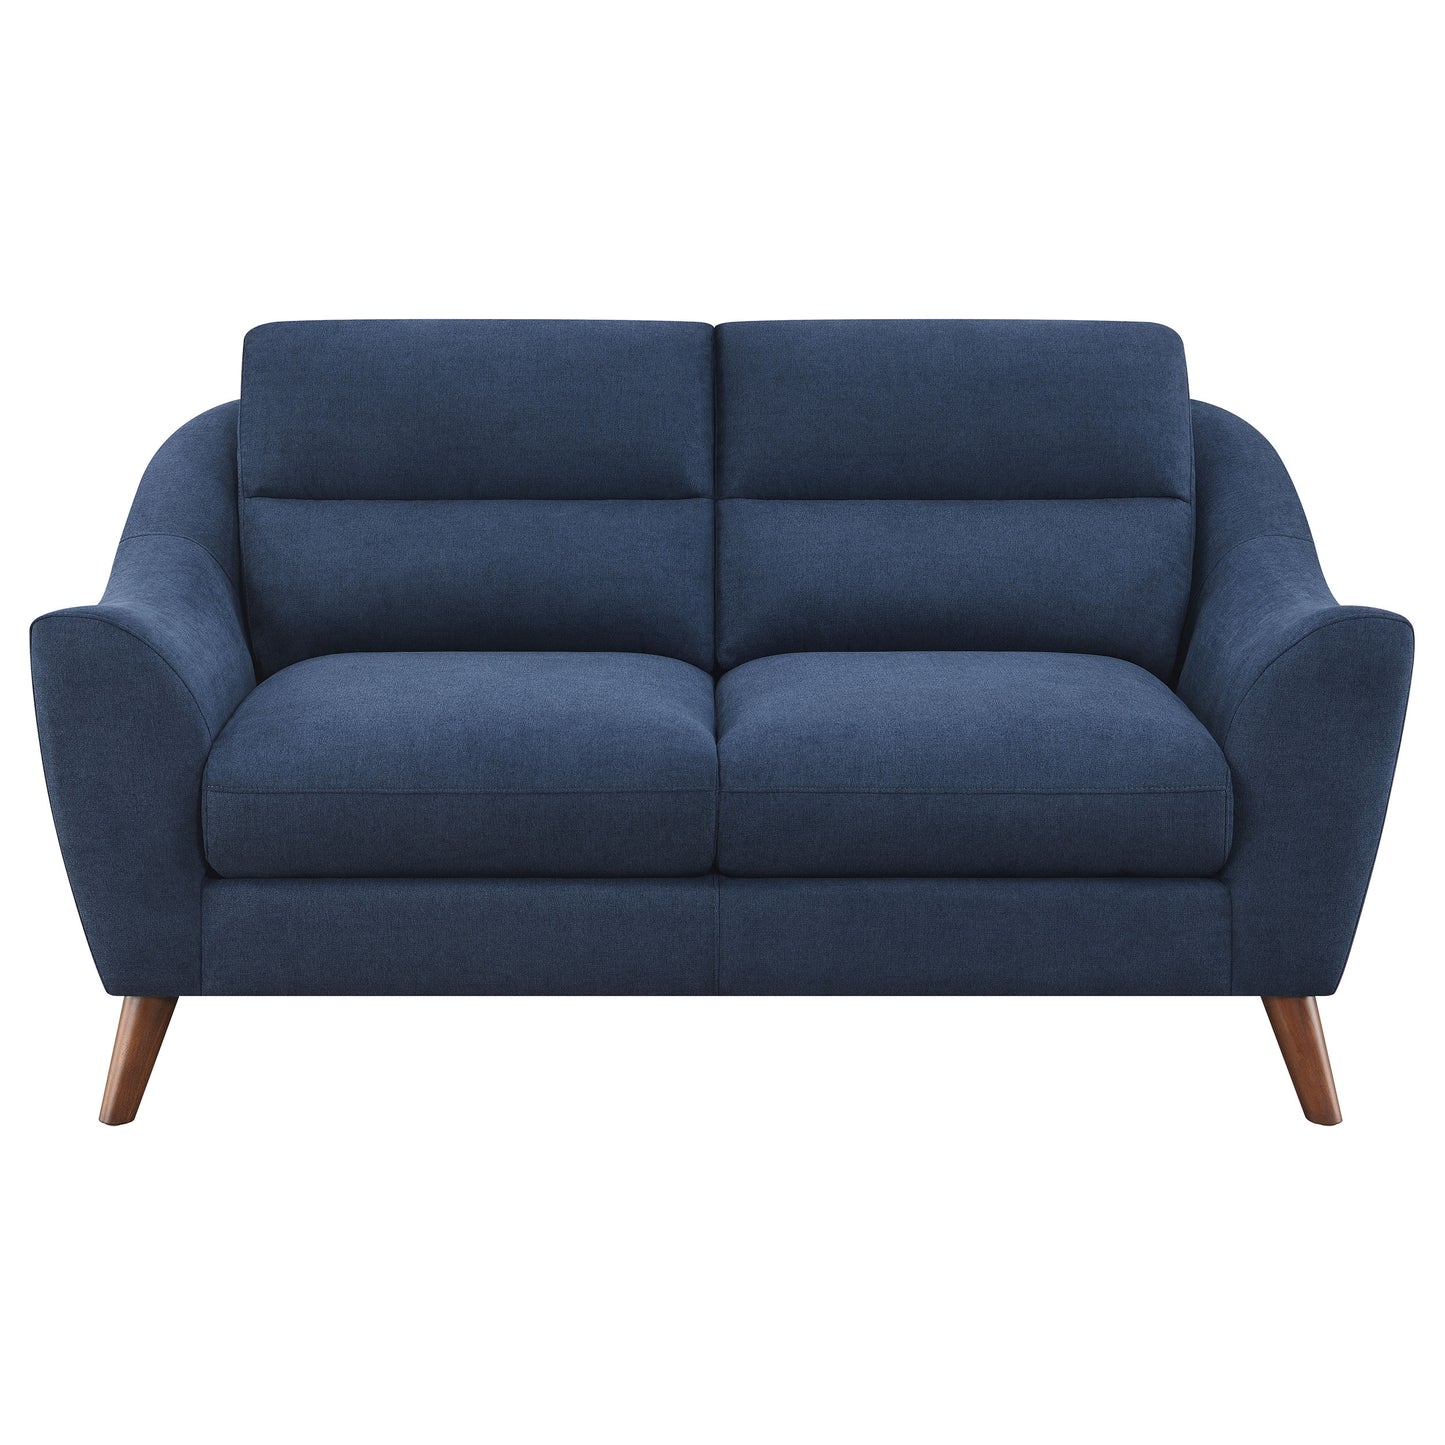 Gano 2-piece Sloped Arm Living Room Set Navy Blue